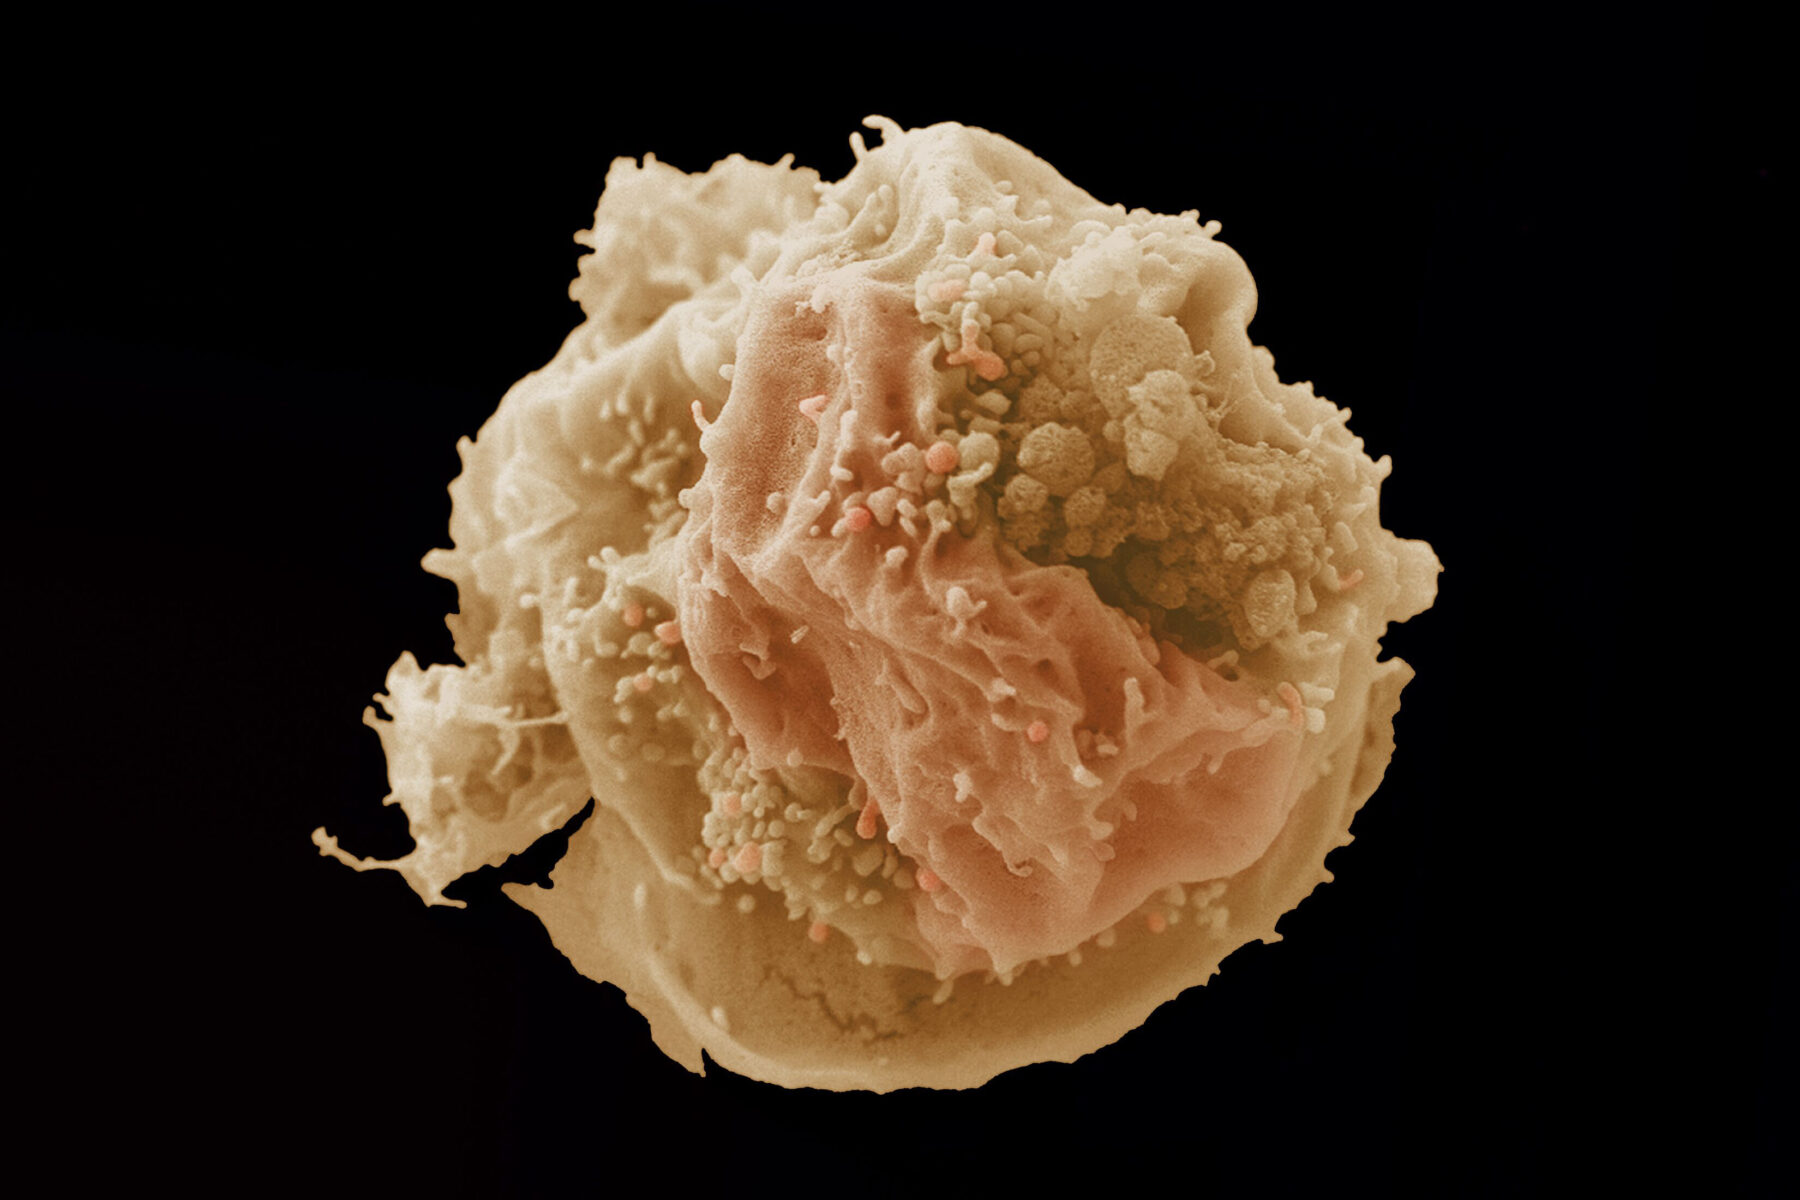 A breast cancer cell seen through an electron microscope.